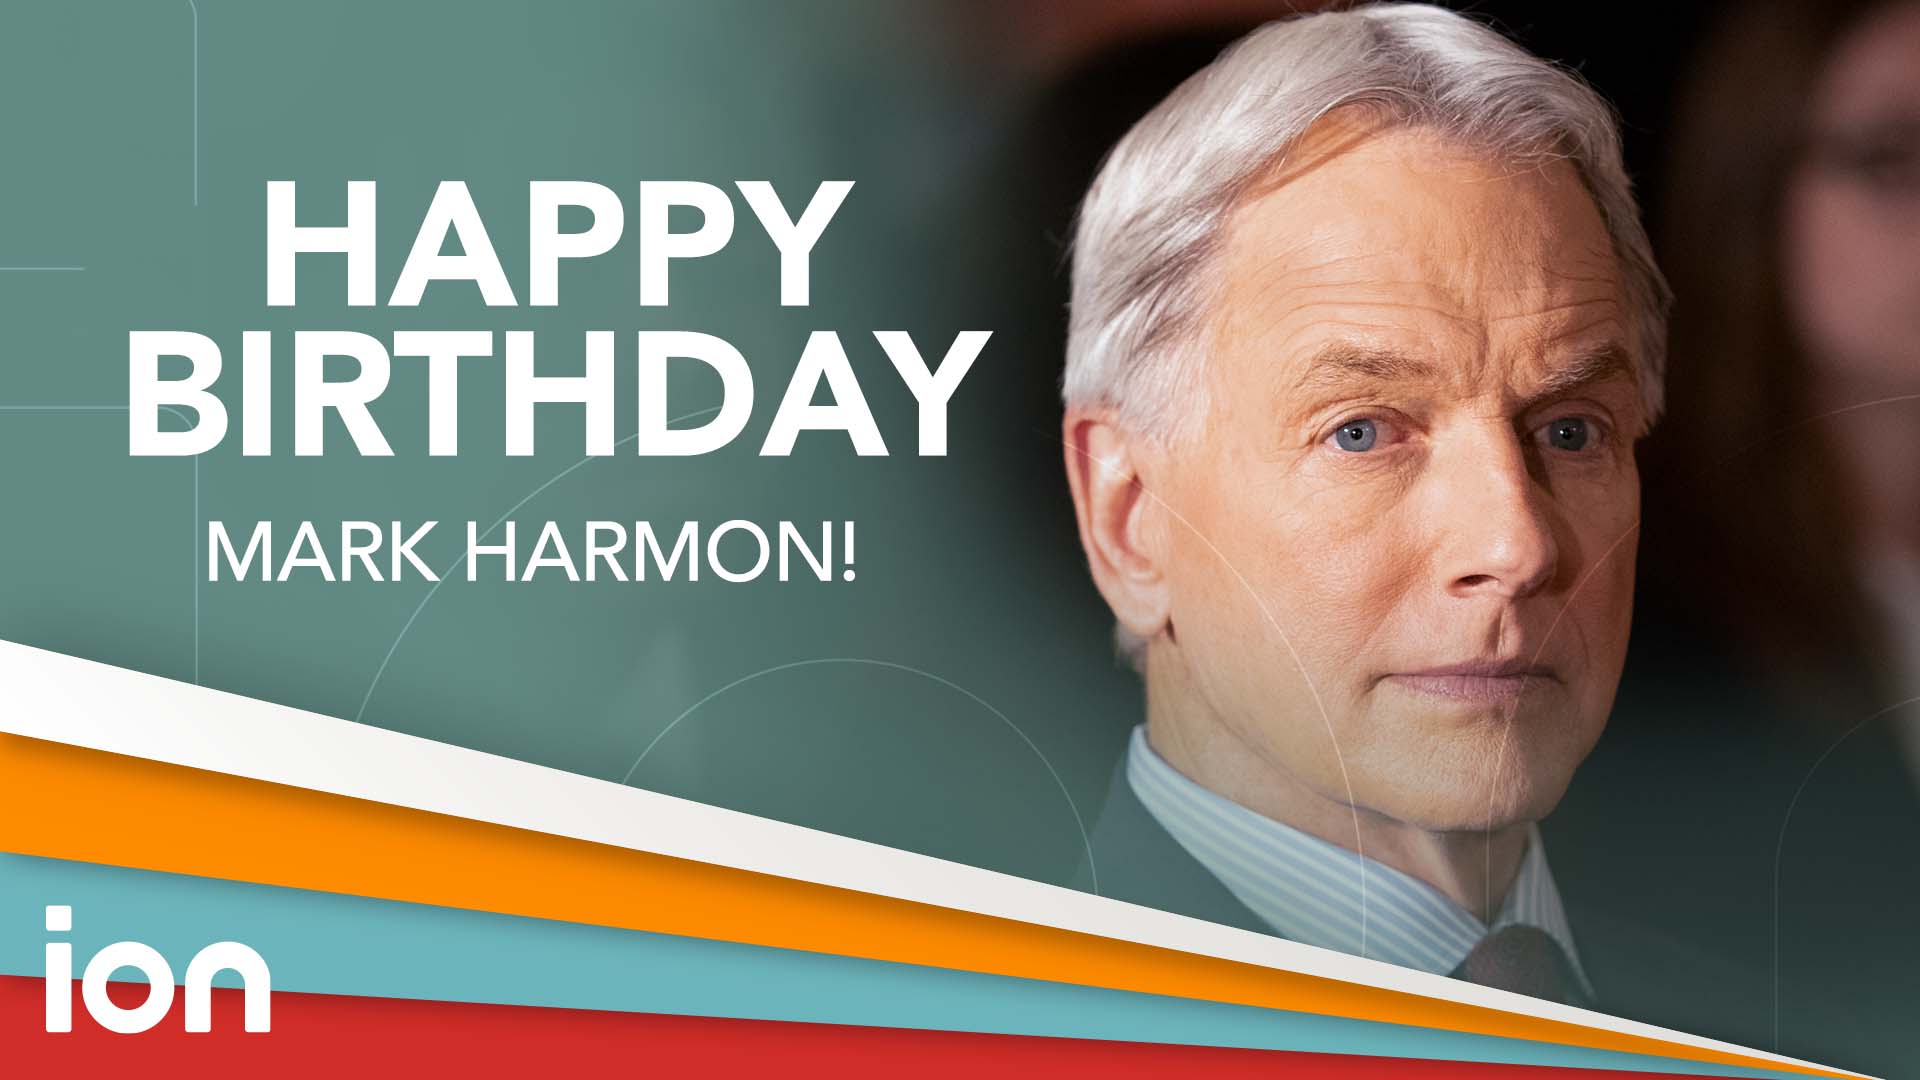 Happy birthday to an original, Mark Harmon! 